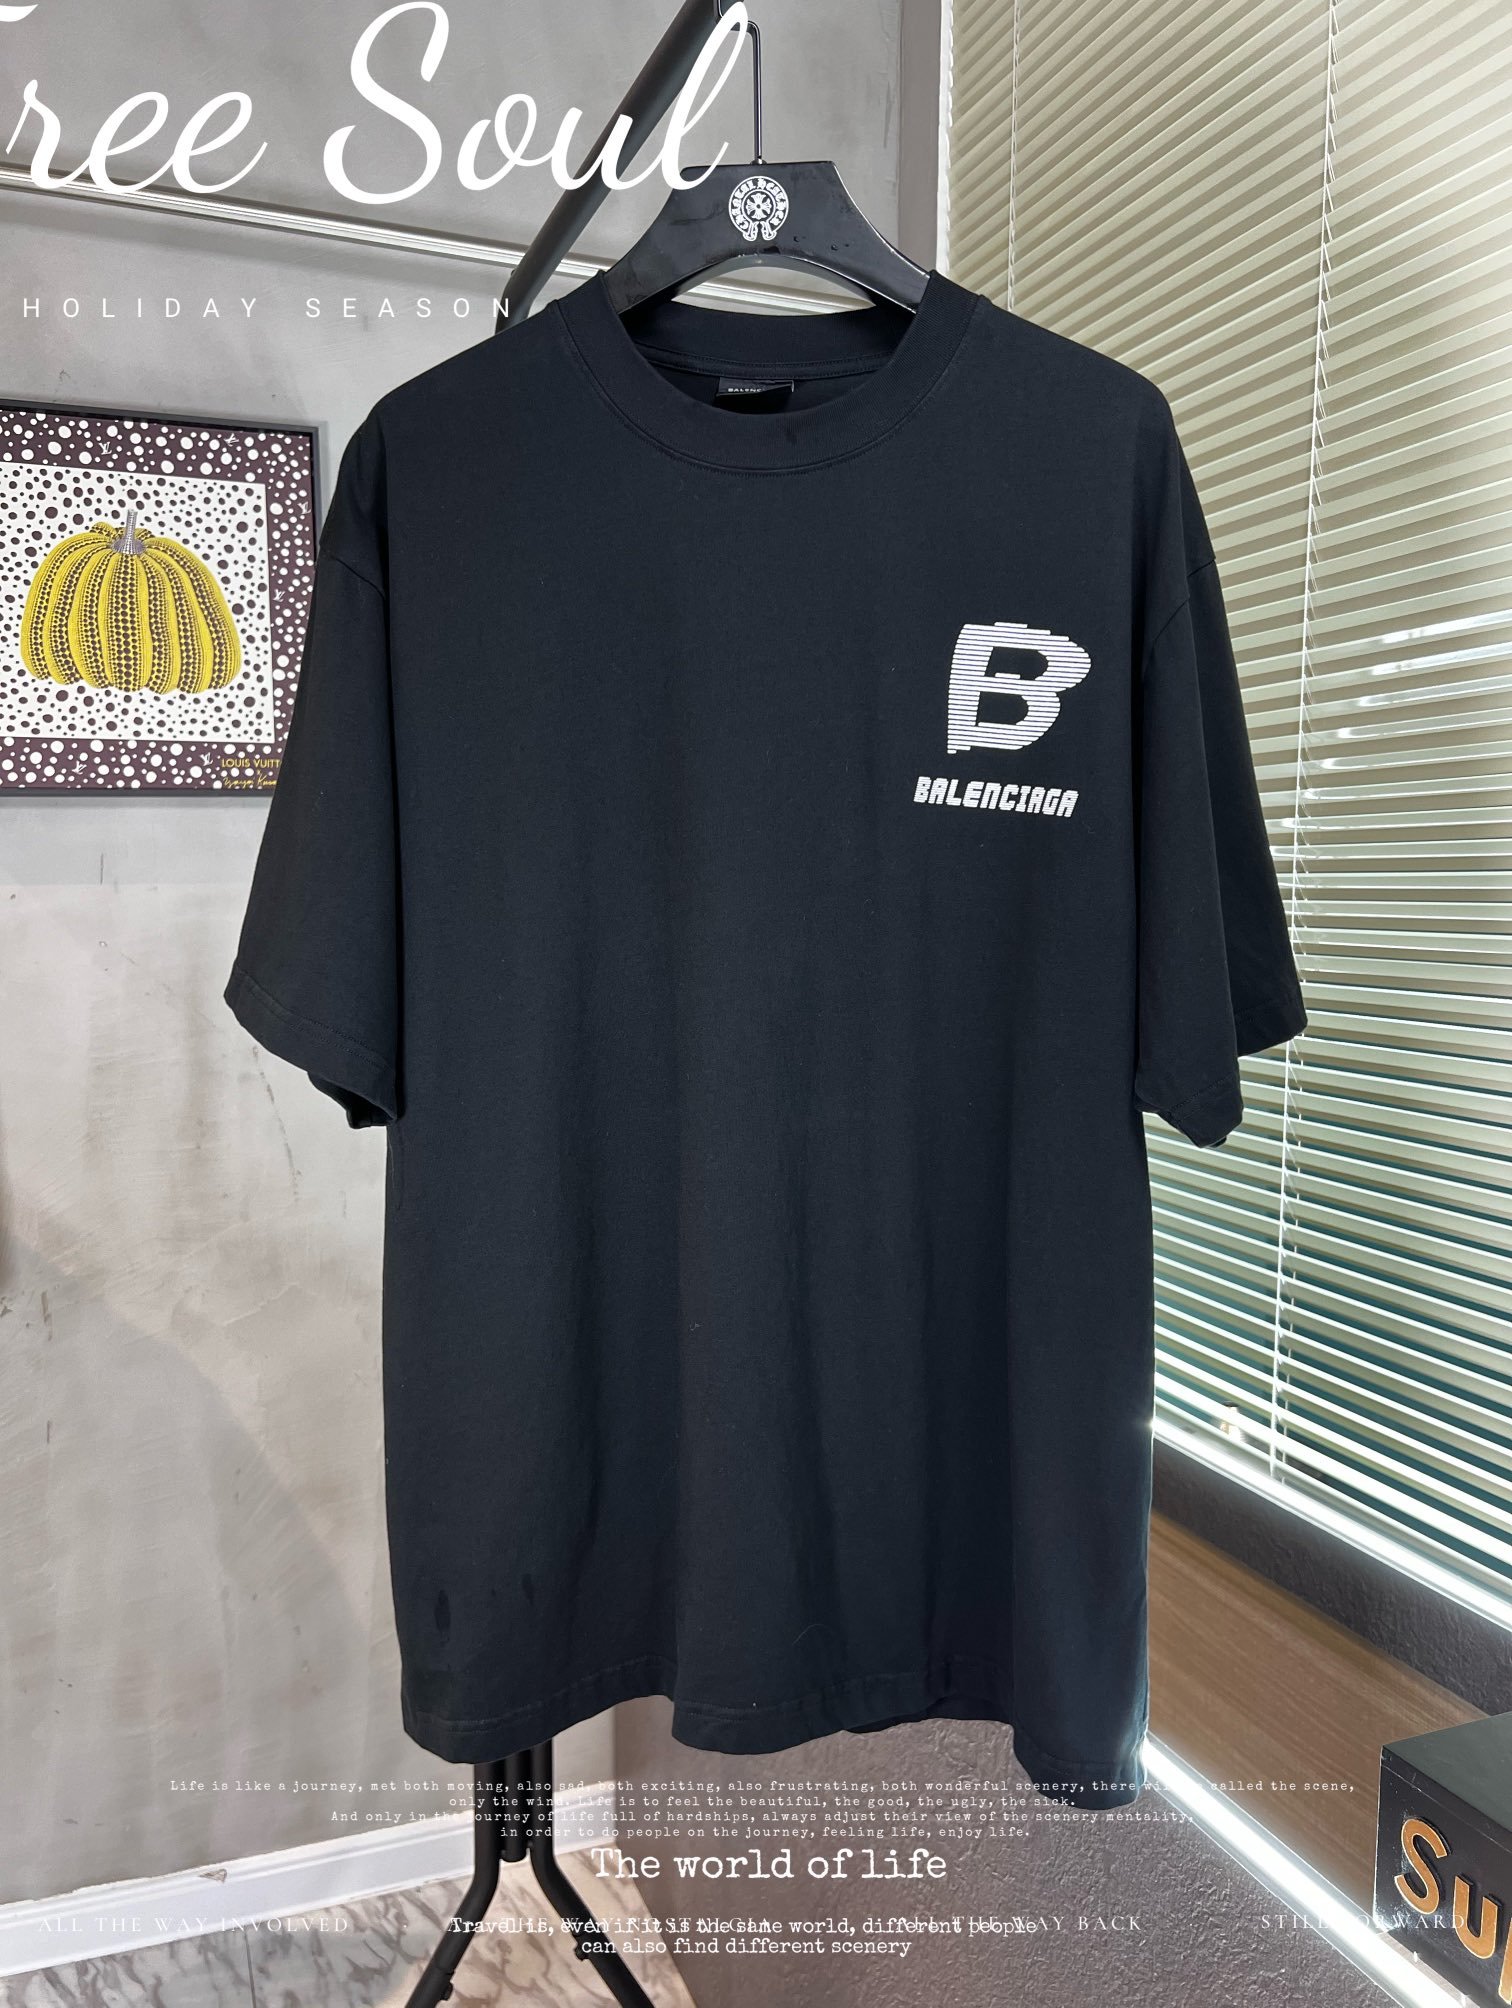 Balenciaga的这款T恤，简直太有个性了！印花设计：这款T恤的印花是那种Balenciaga独有的打印机字体，简洁又大气，给人一种独特的艺术感。size:Xs-m